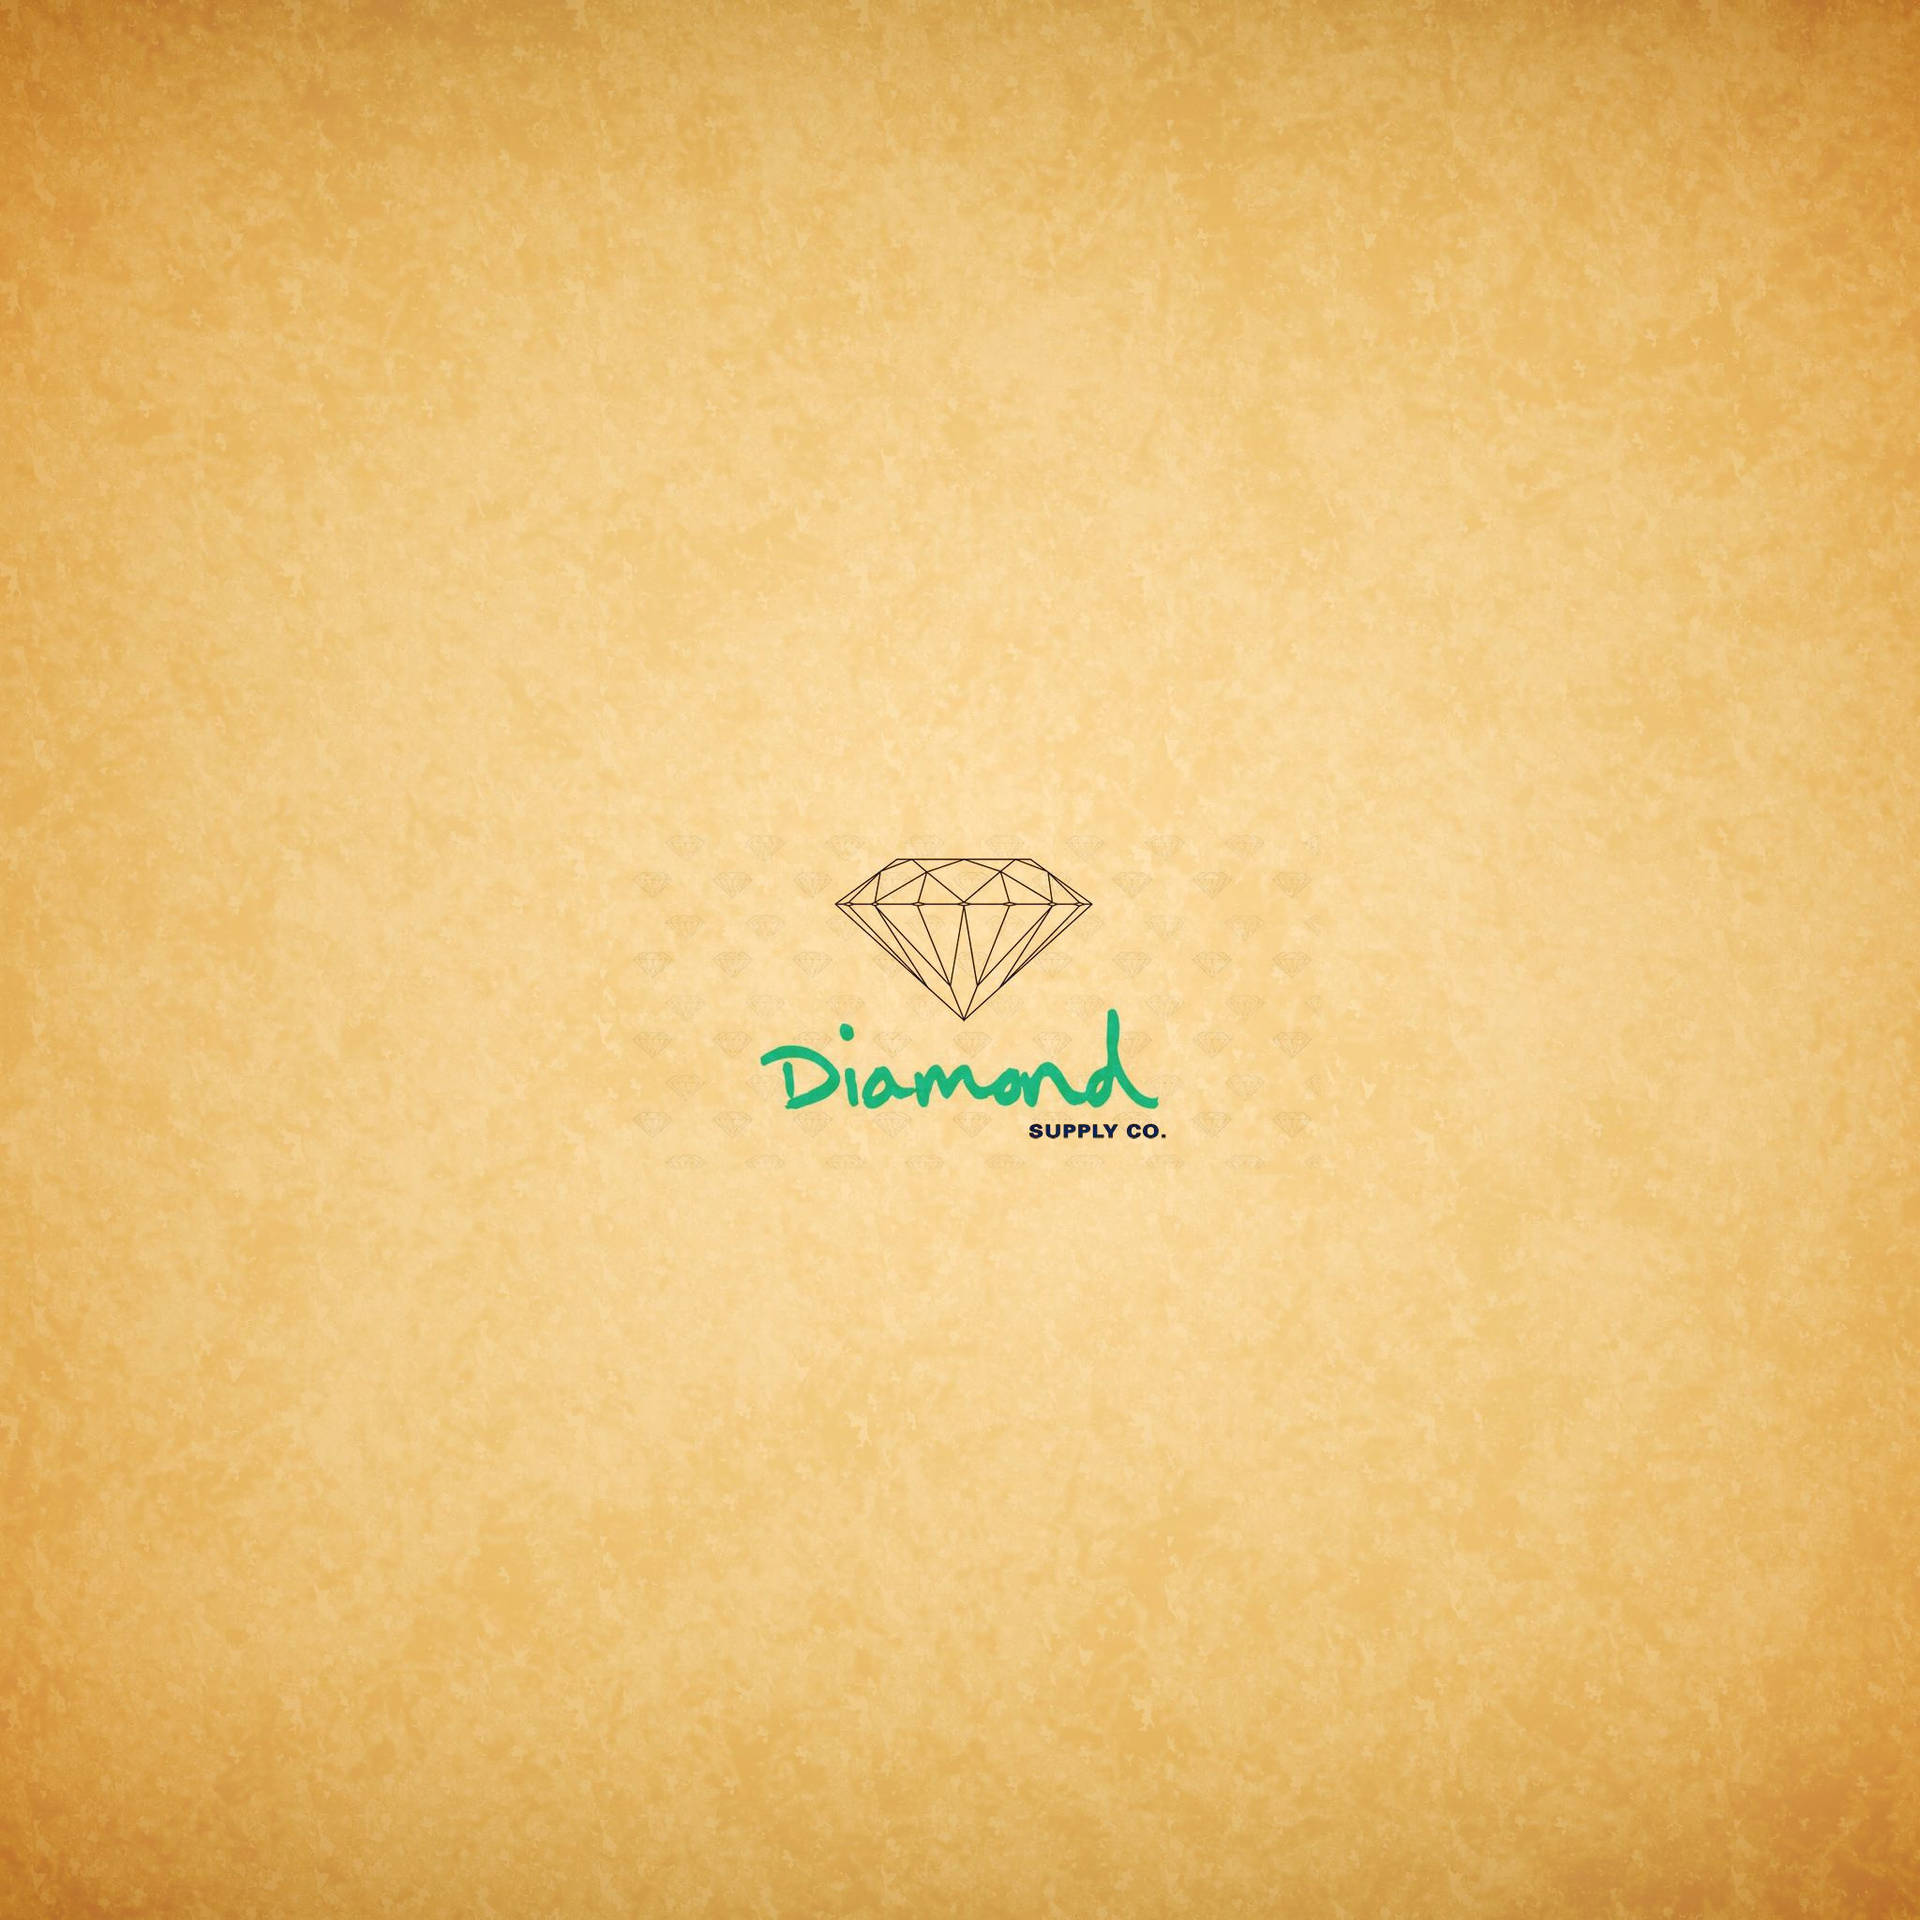 Aesthetic Diamond Supply Co Logo Background